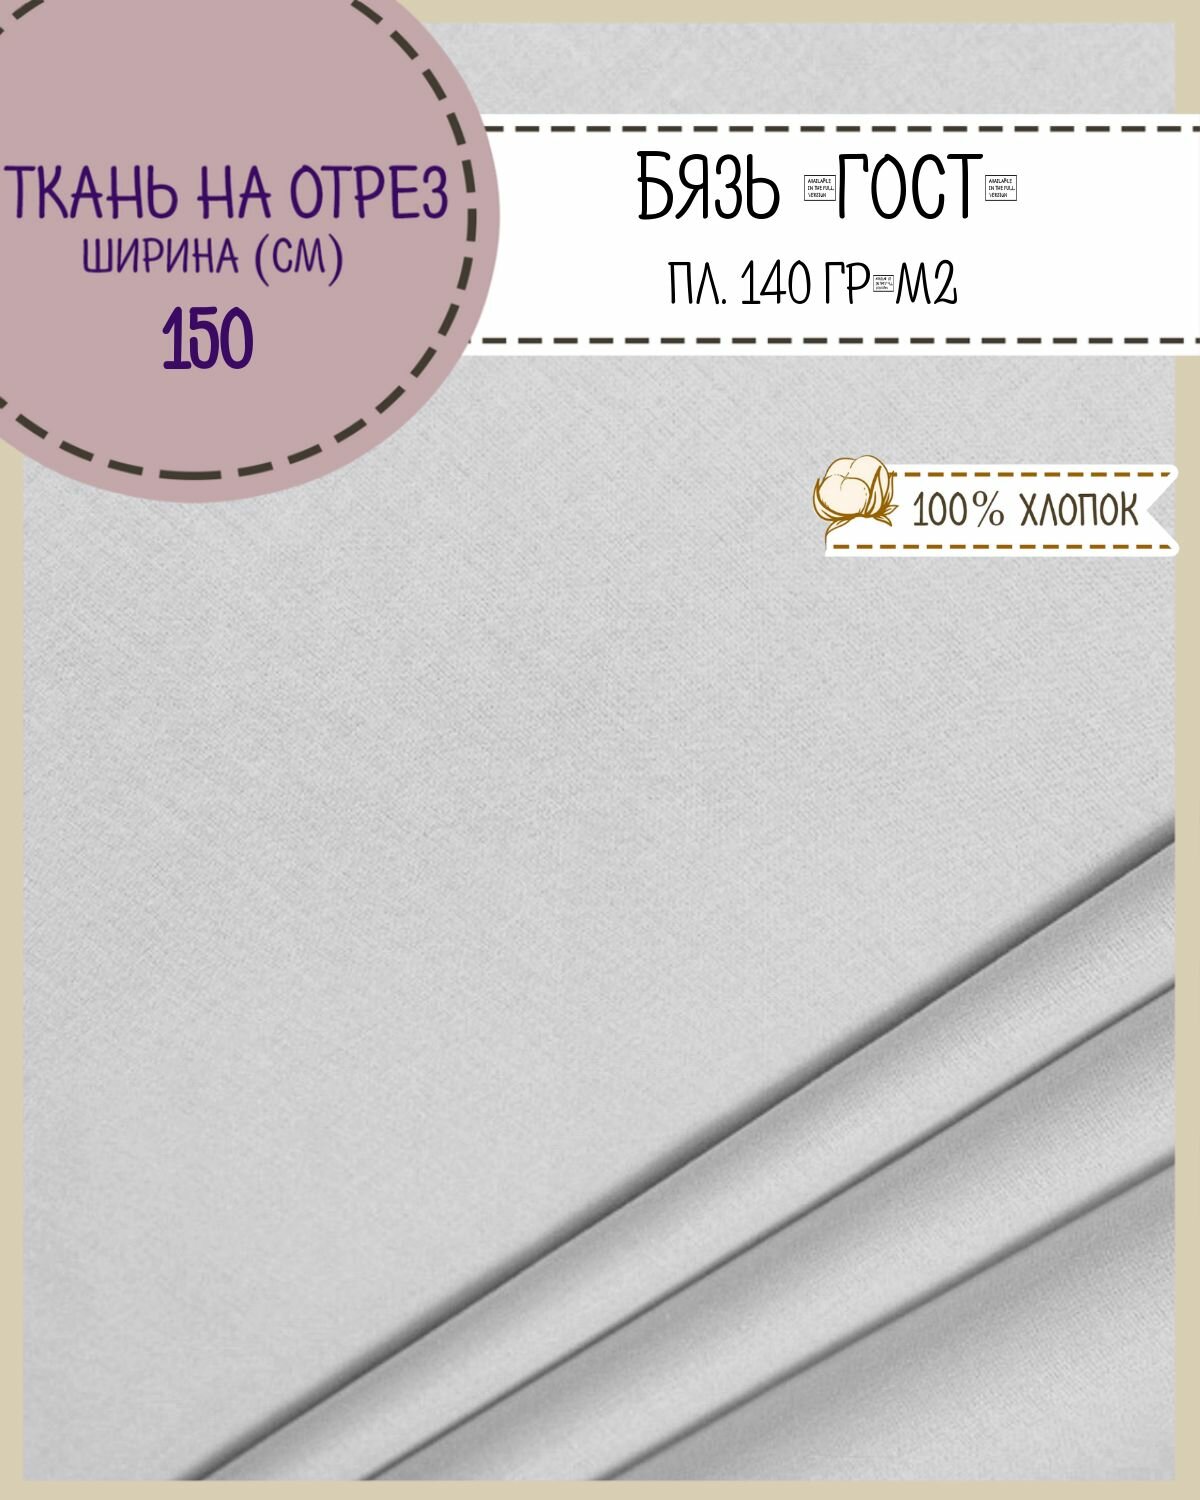 Ткань Бязь ГОСТ однотонная, серый, 100% хлопок, пл. 140 г/м2, ш-150 см, на отрез, цена за пог. метр